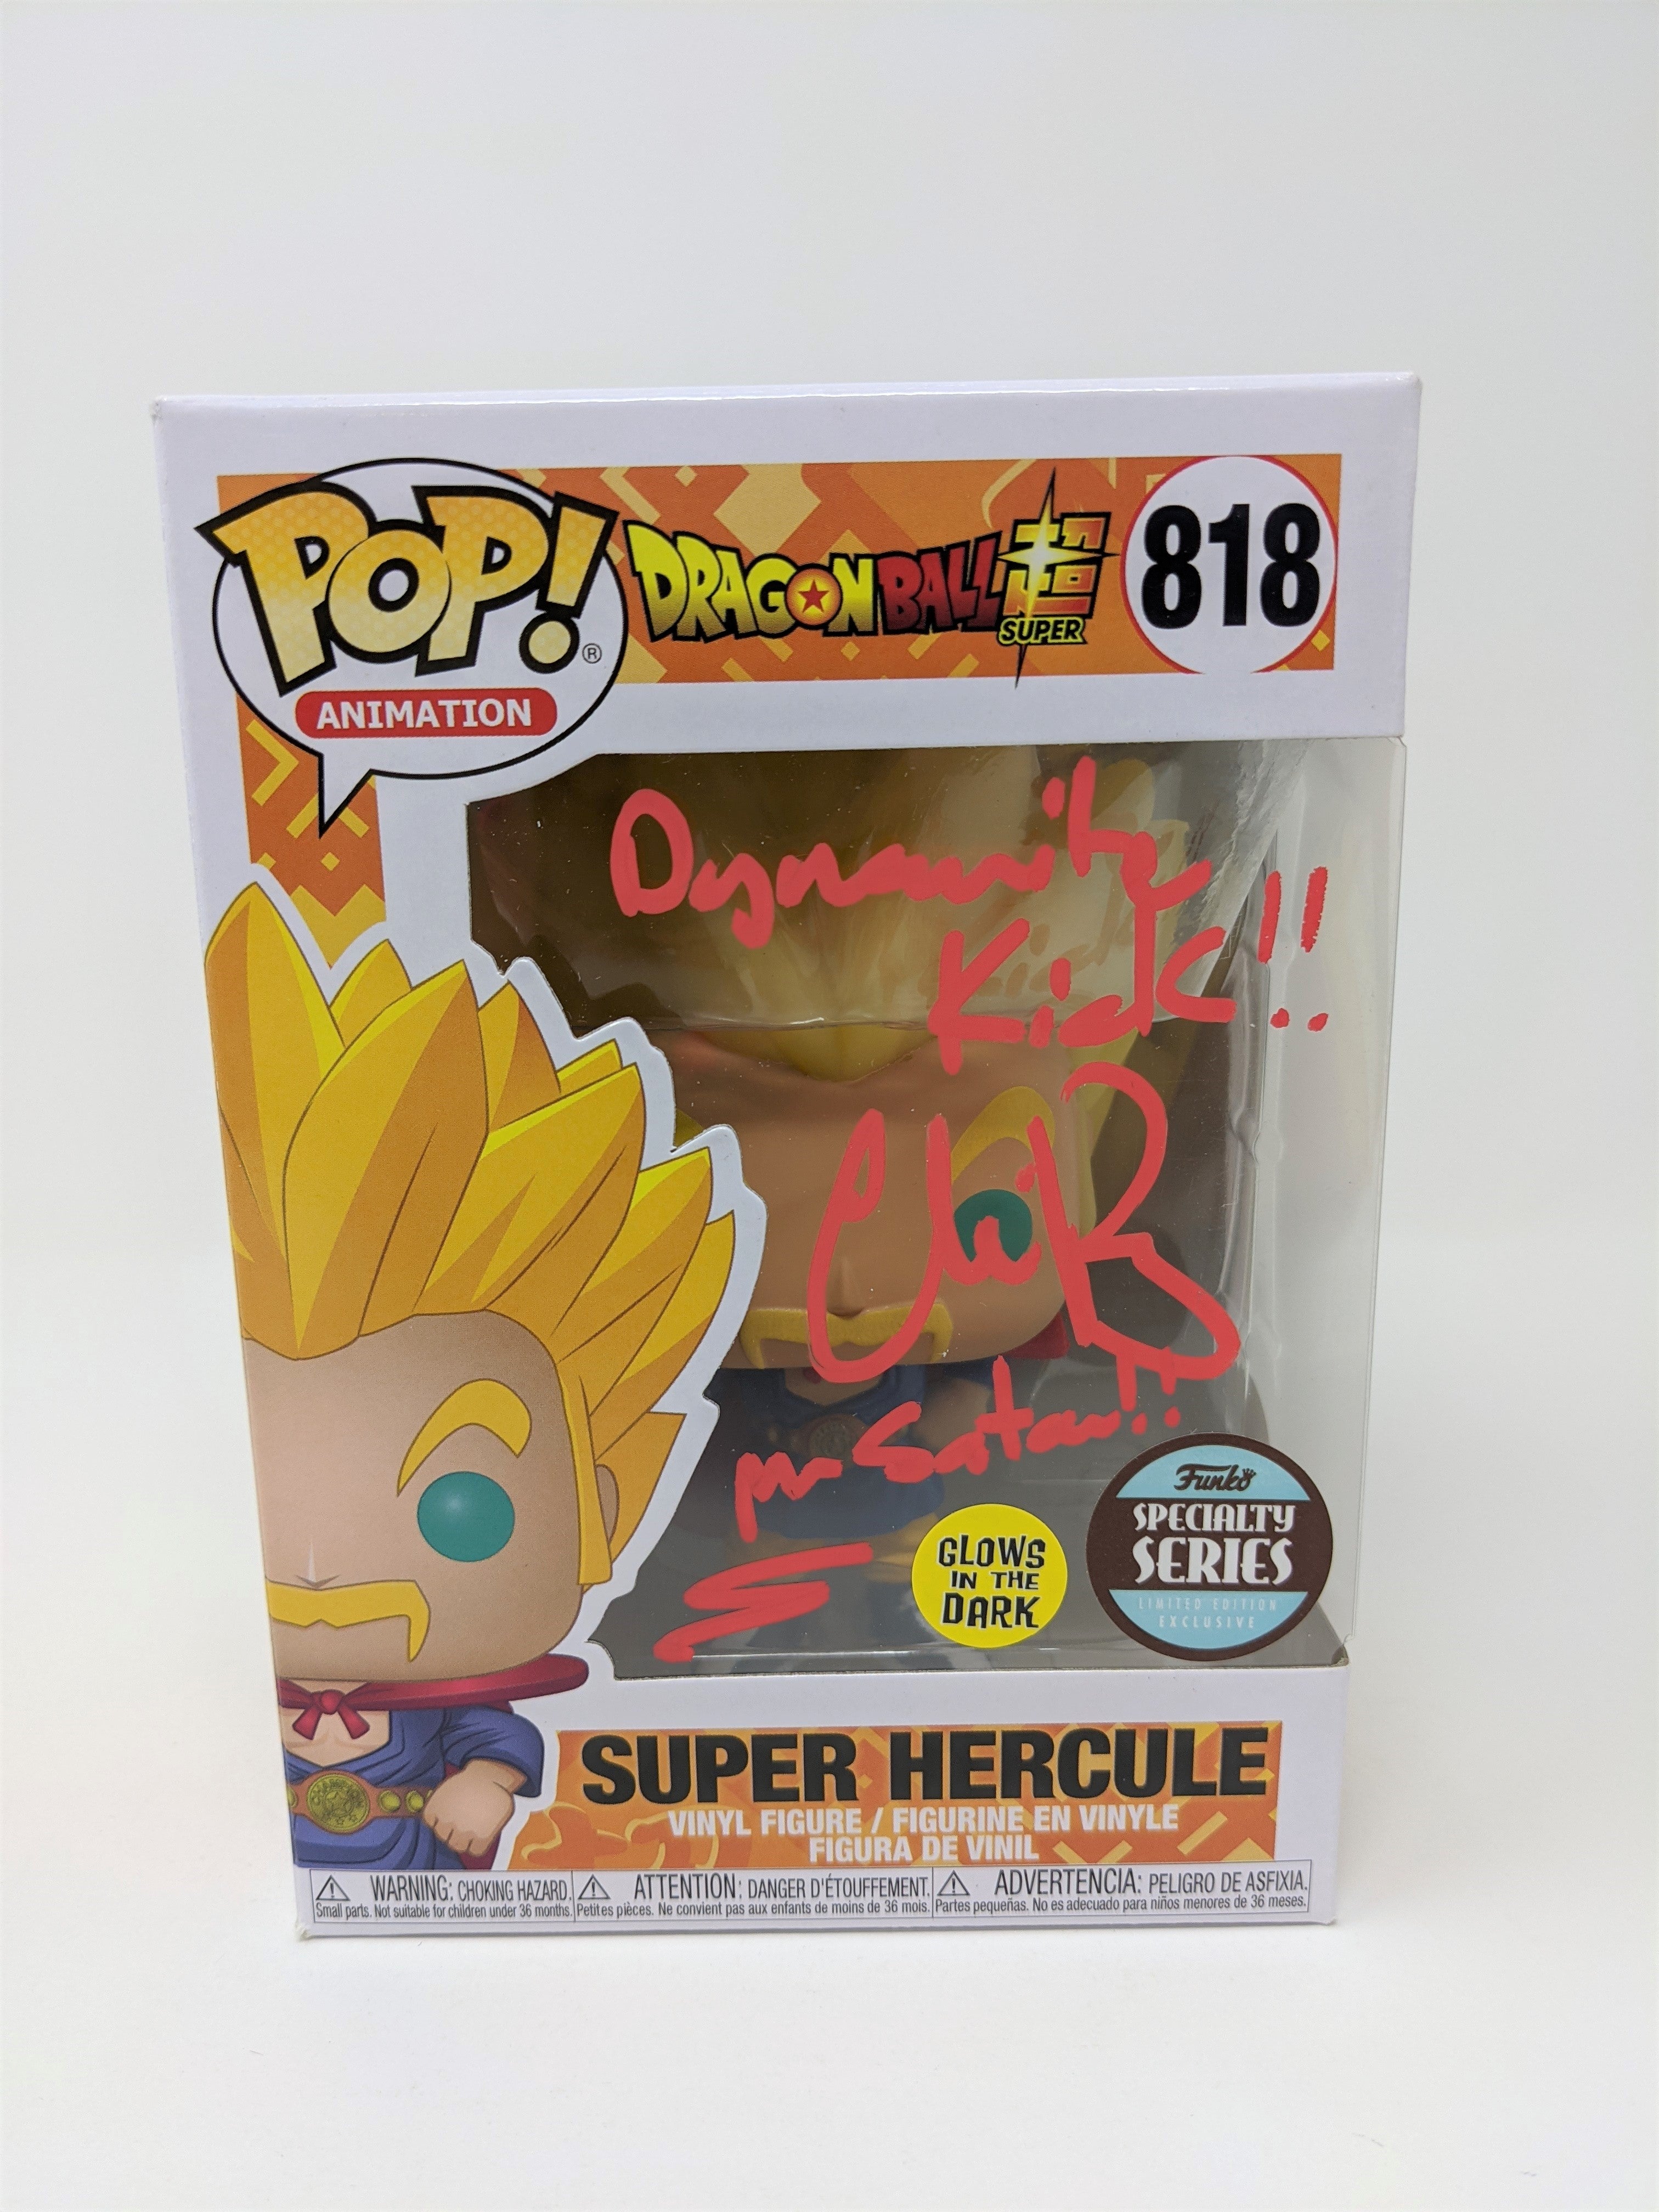 Chris Rager Dragon Ball Super Hercule #818 Exclusive Signed Funko Pop JSA COA Certified Autograph